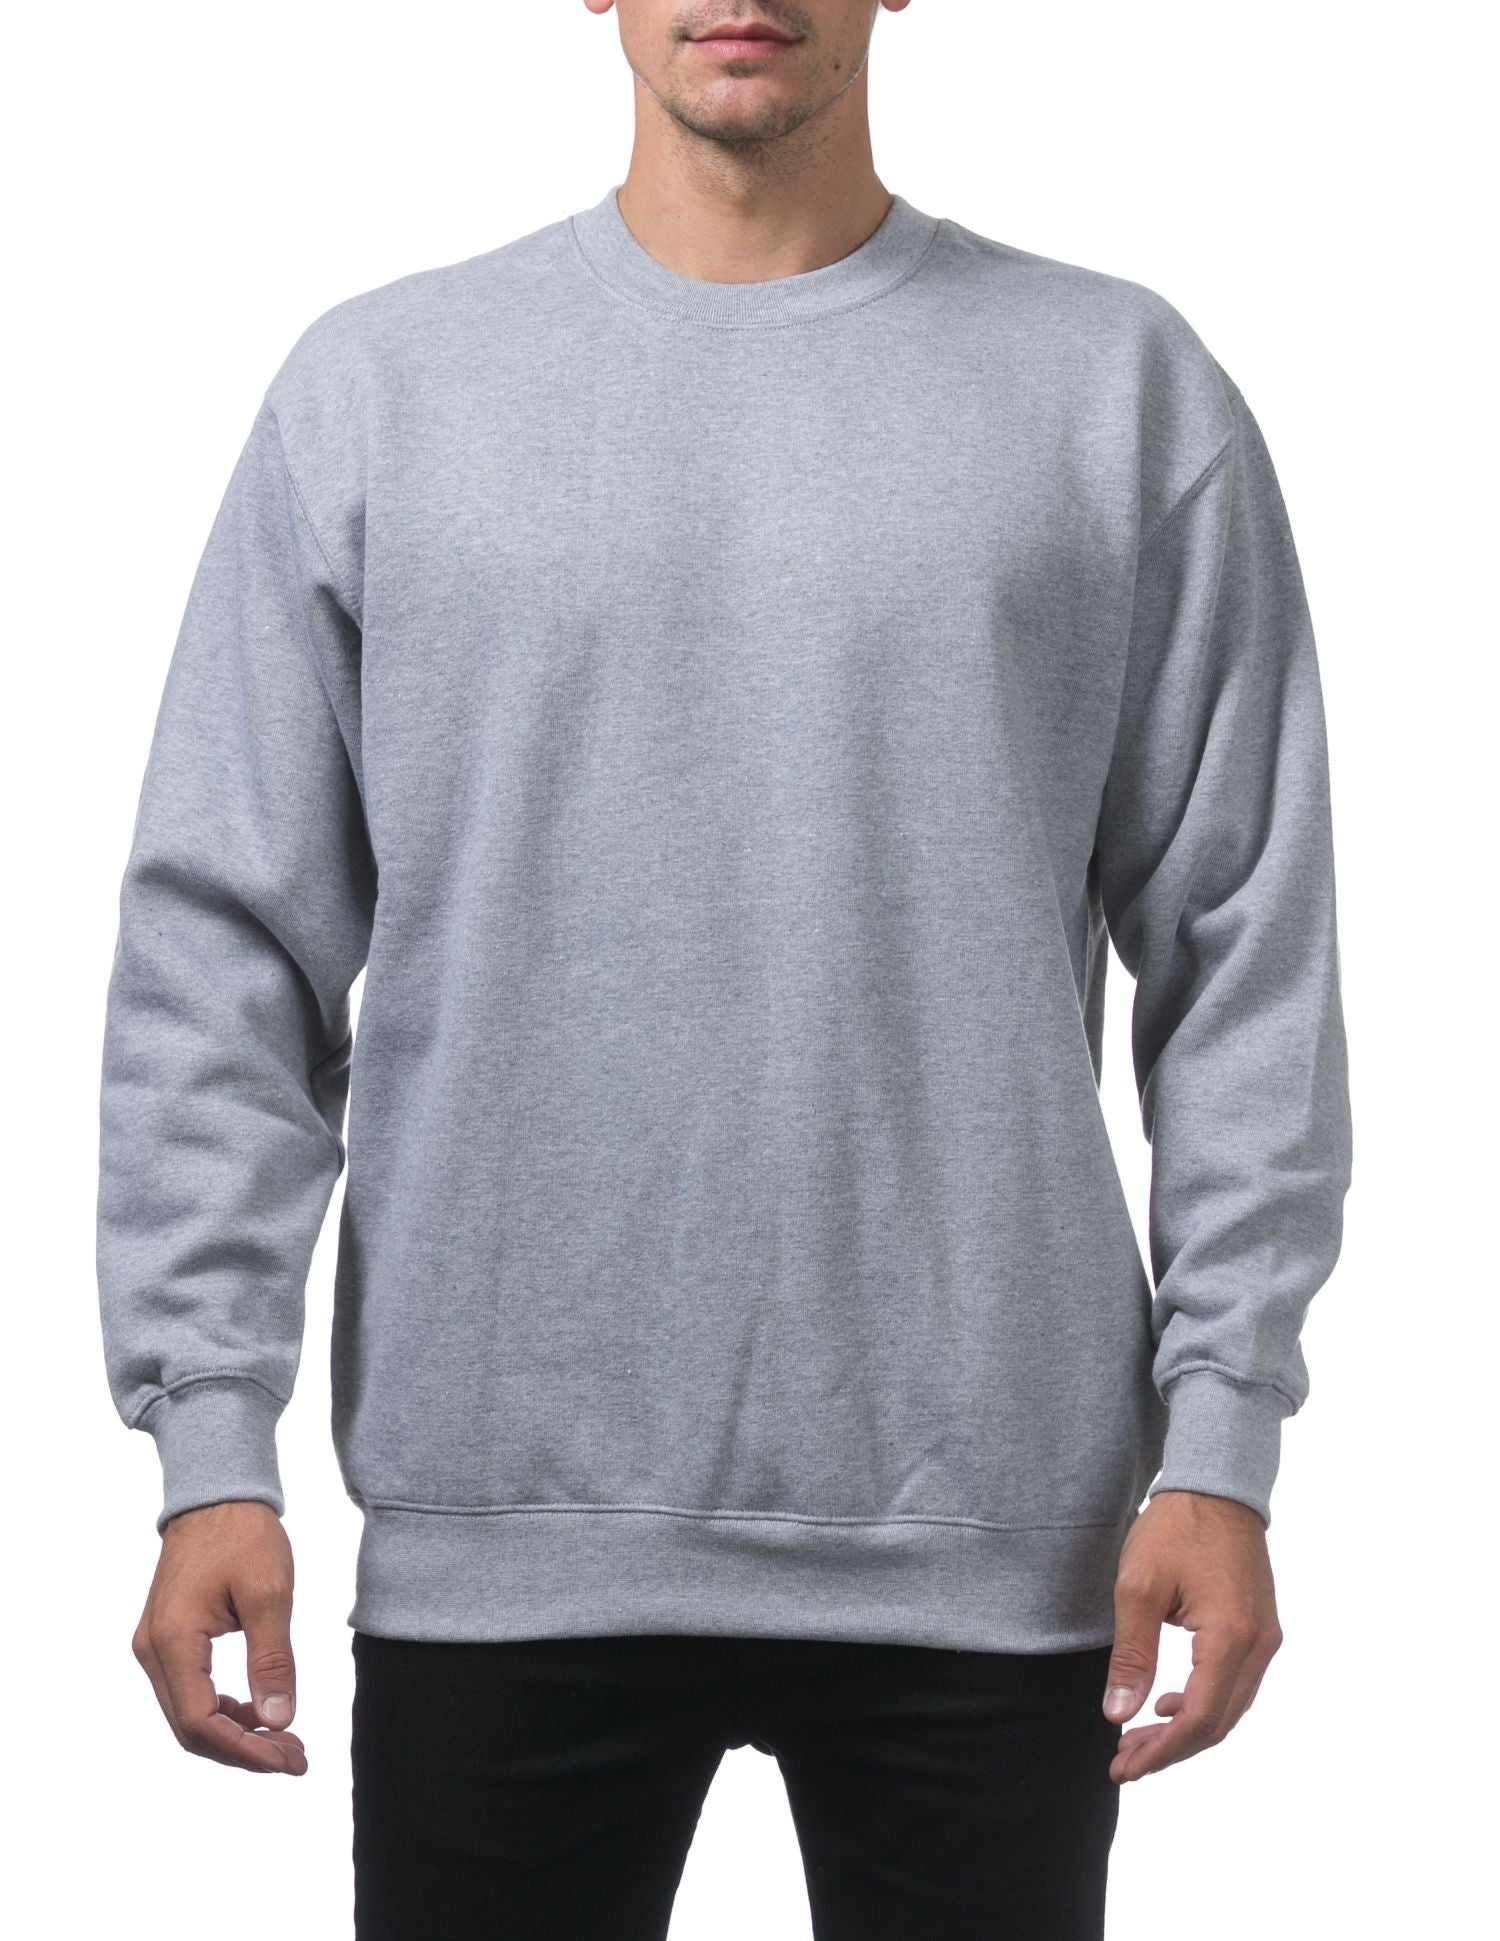 Pro Club Men's Plain Blank Crew Neck Fleece Pullover Sweater